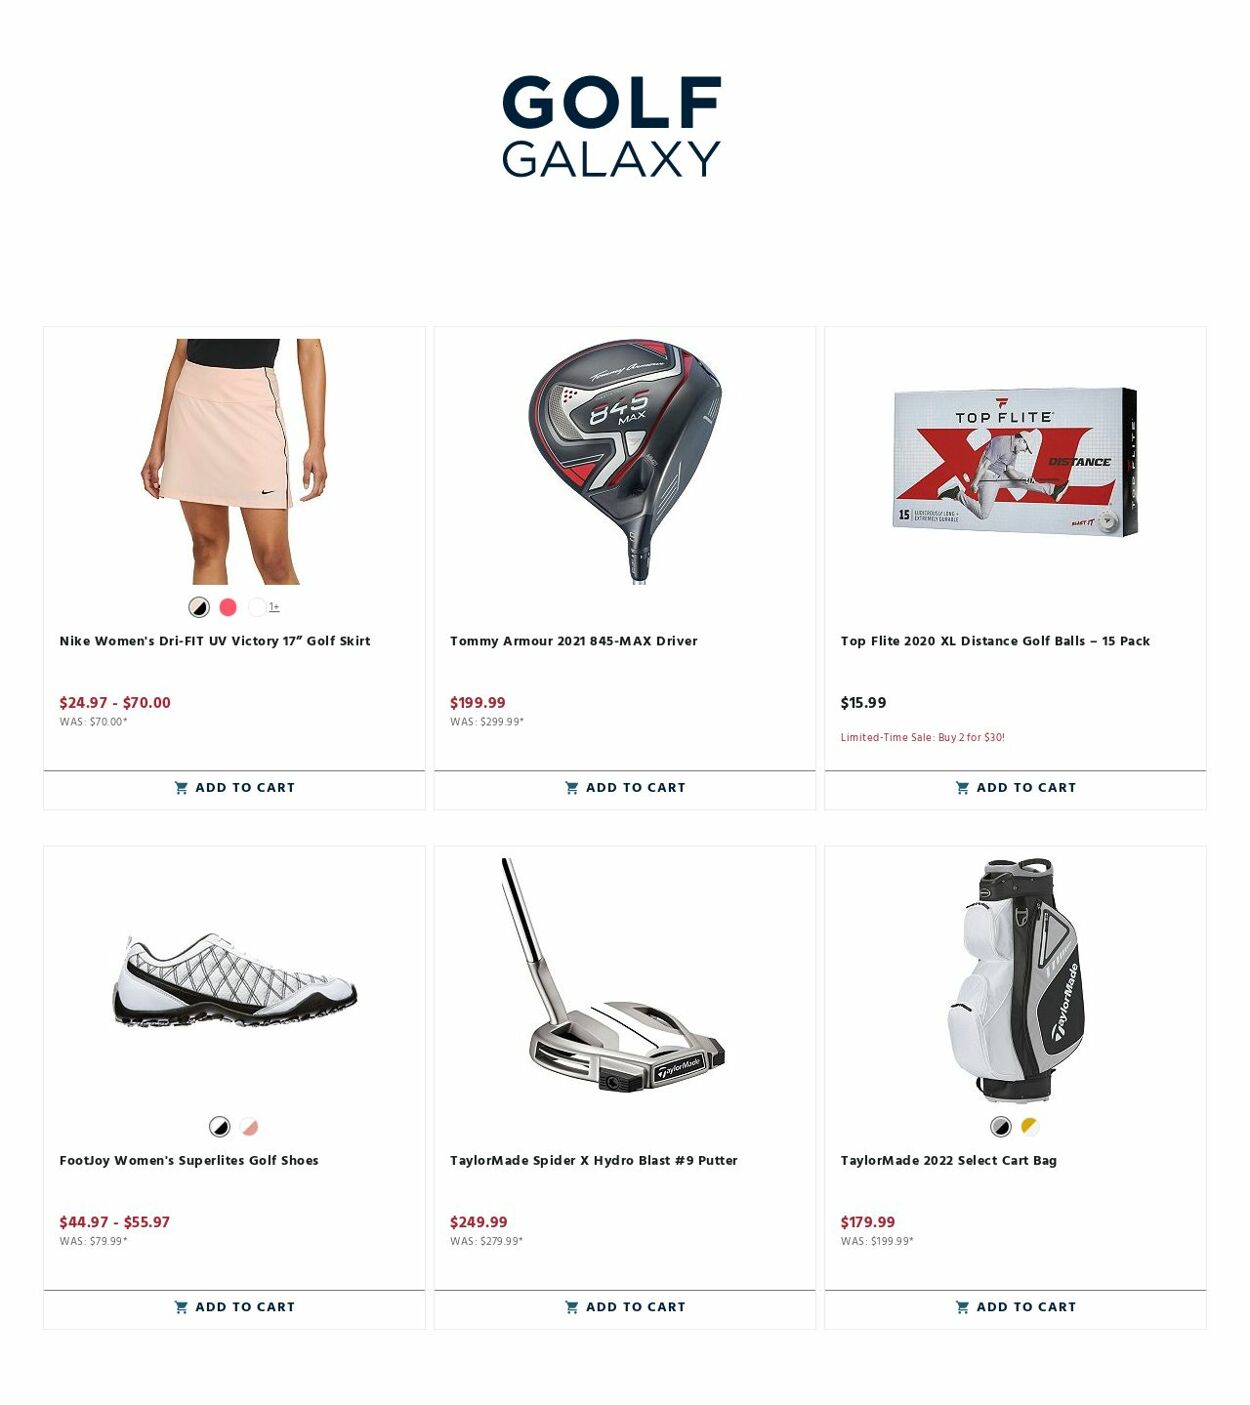 Golf Galaxy Ad from 09/03/2022